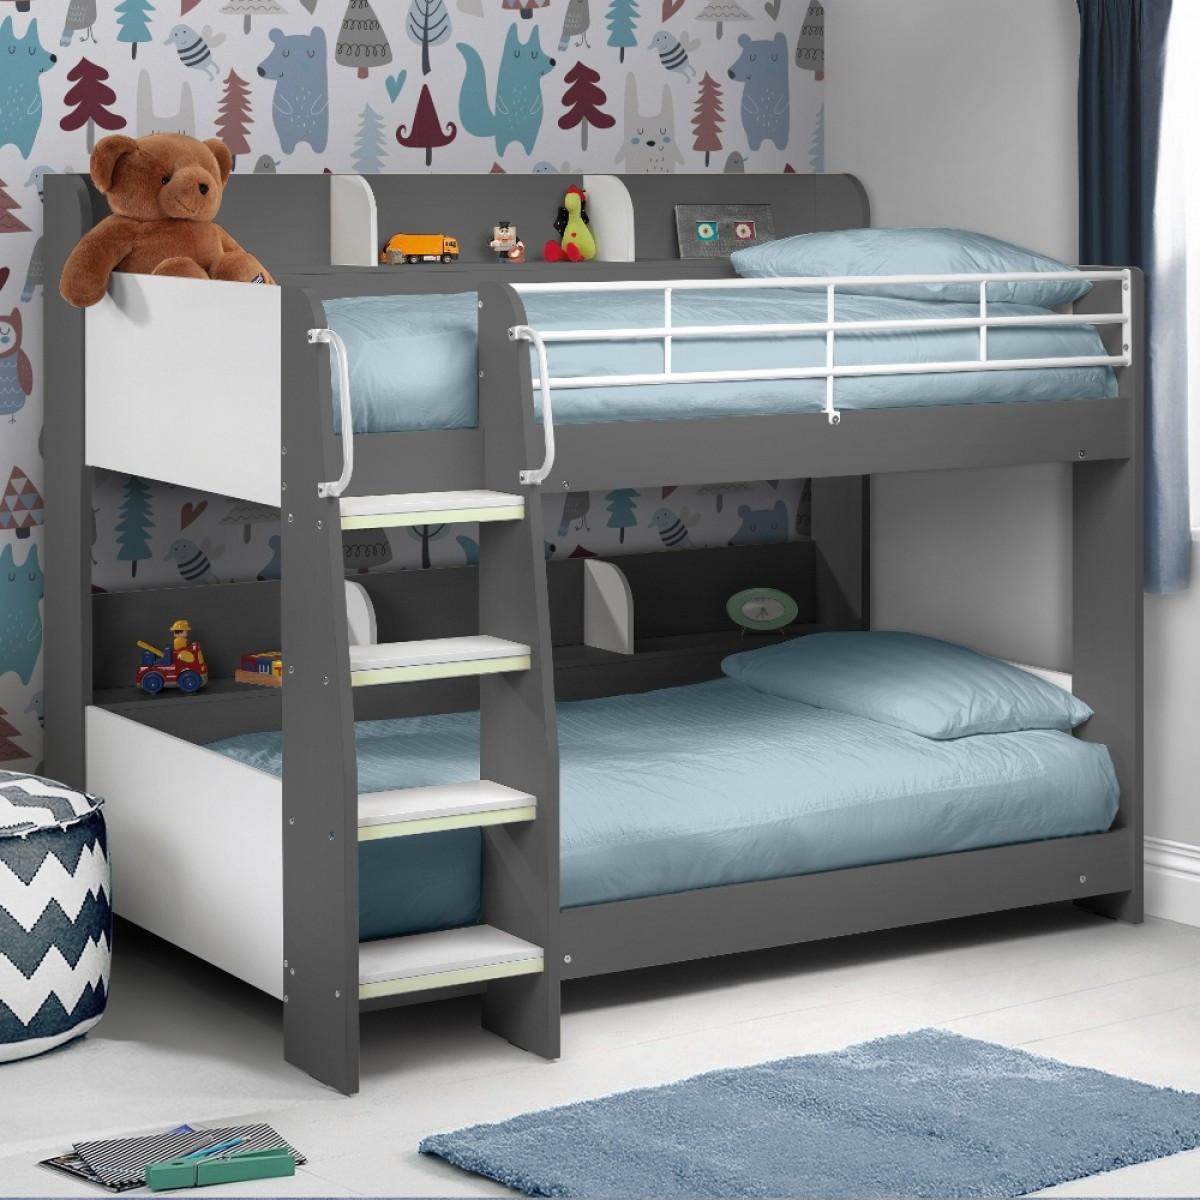 Kids Bunk Beds With Storage
 Domino Grey Wooden and Metal Kids Storage Bunk Bed